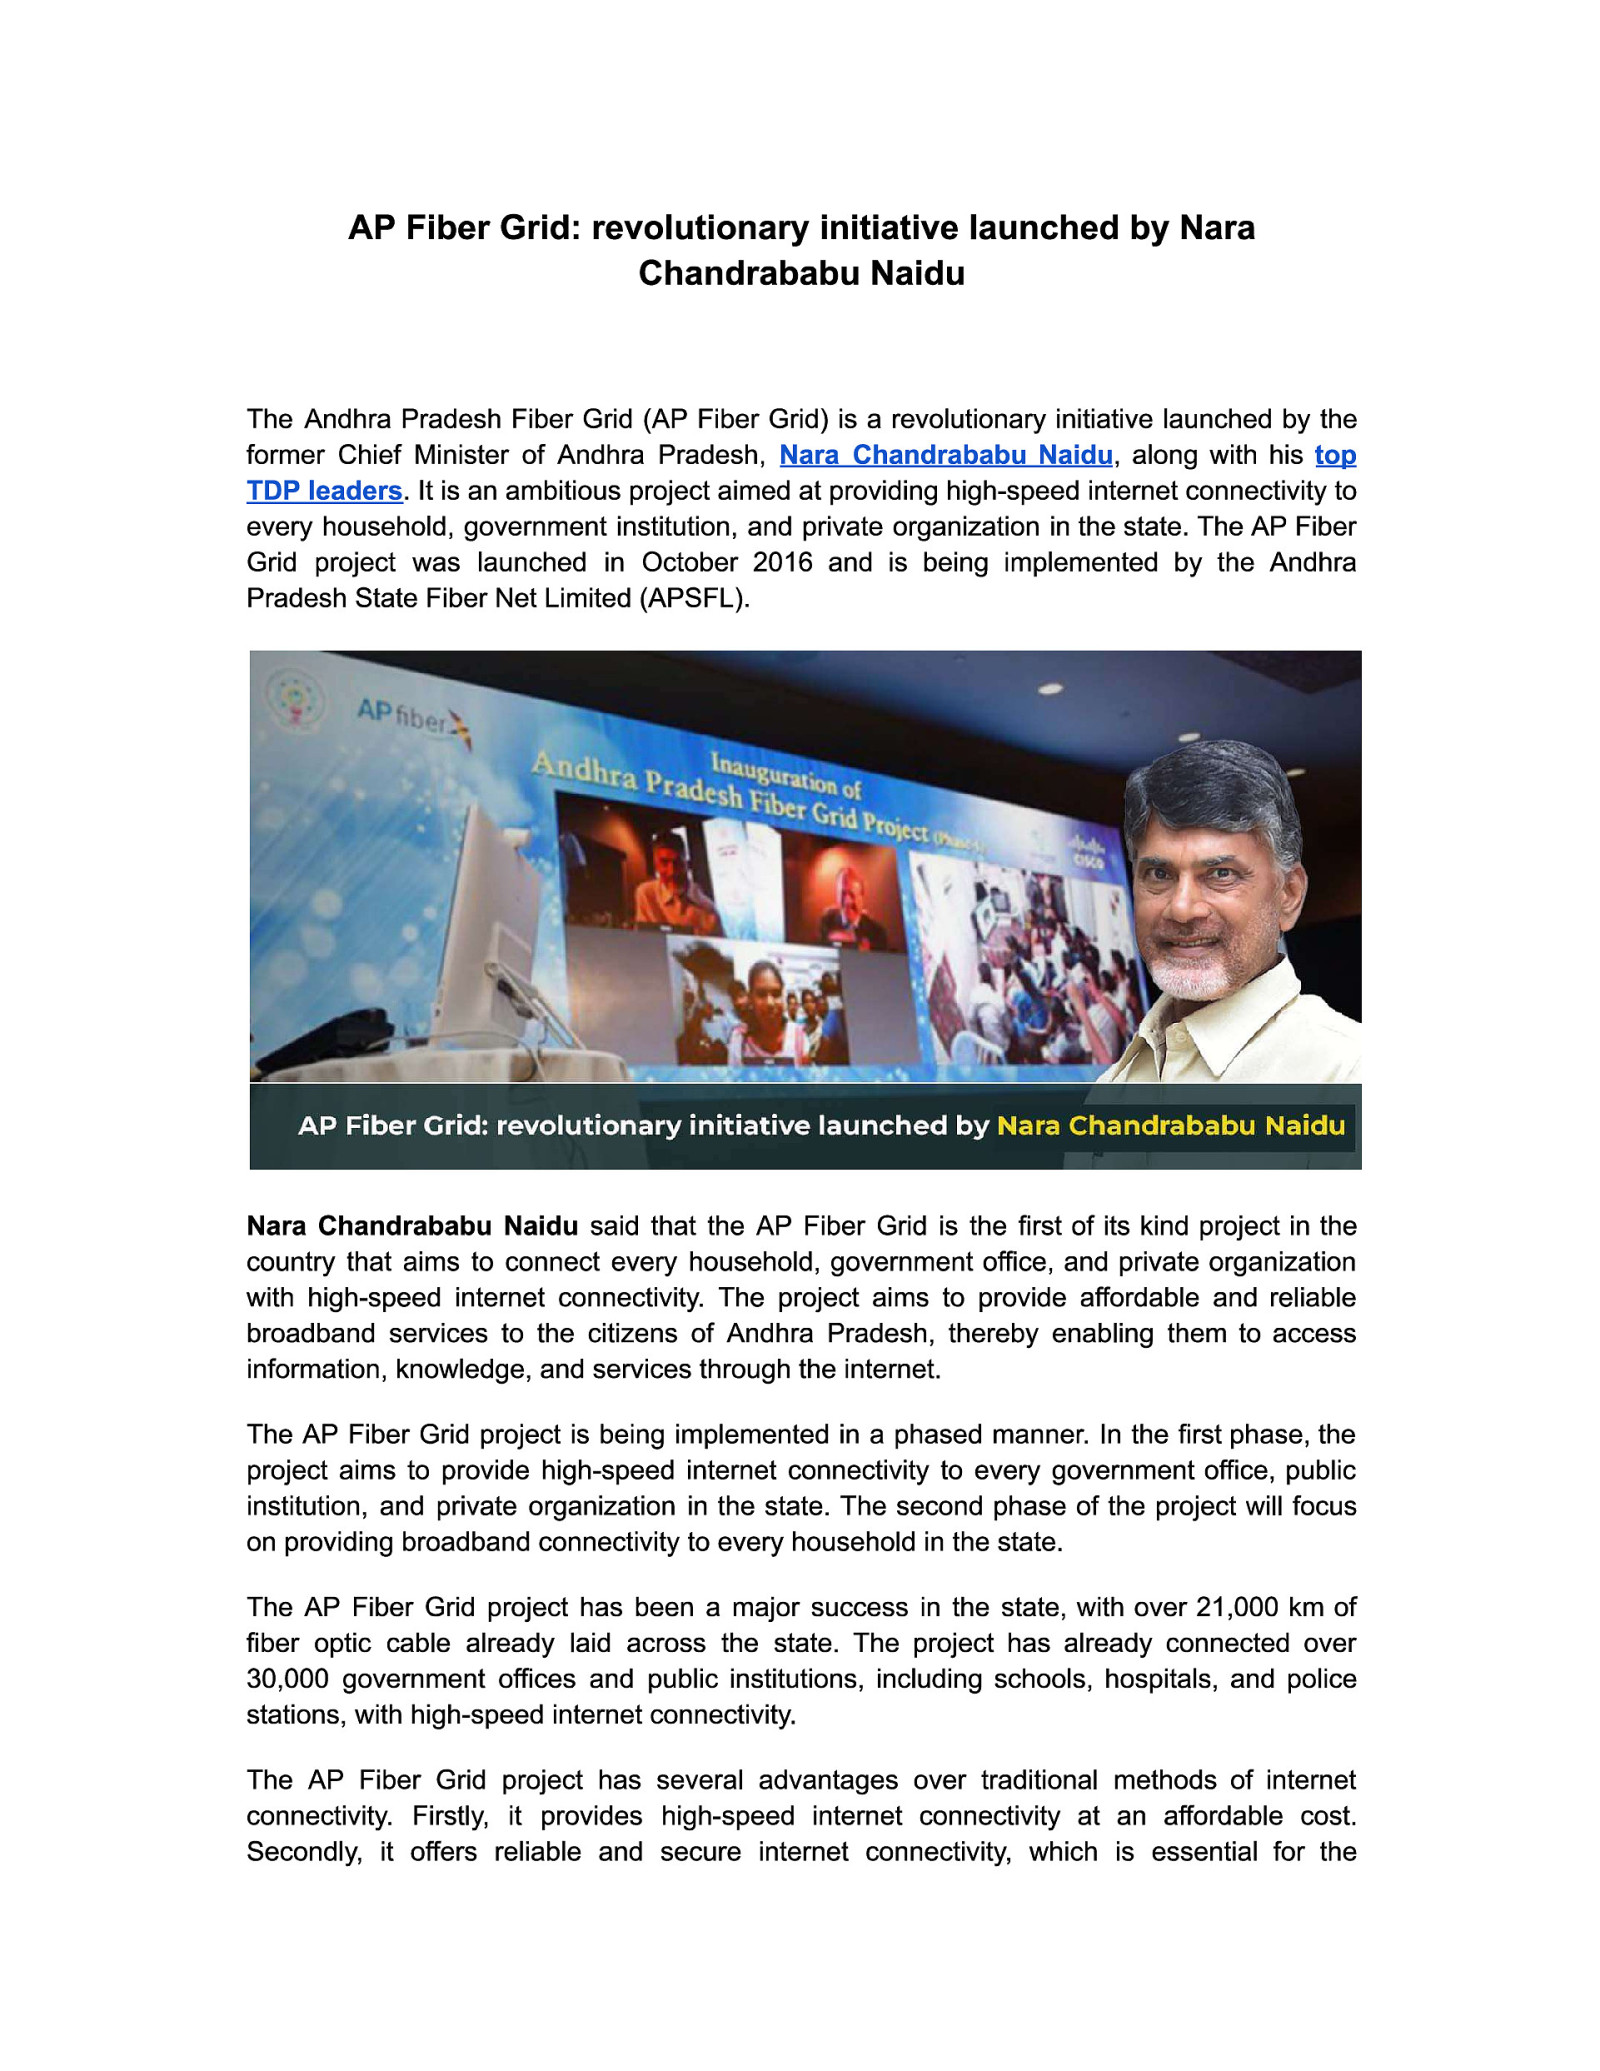 AP Fiber Grid: revolutionary initiative launched by Nara Chandrababu Naidu